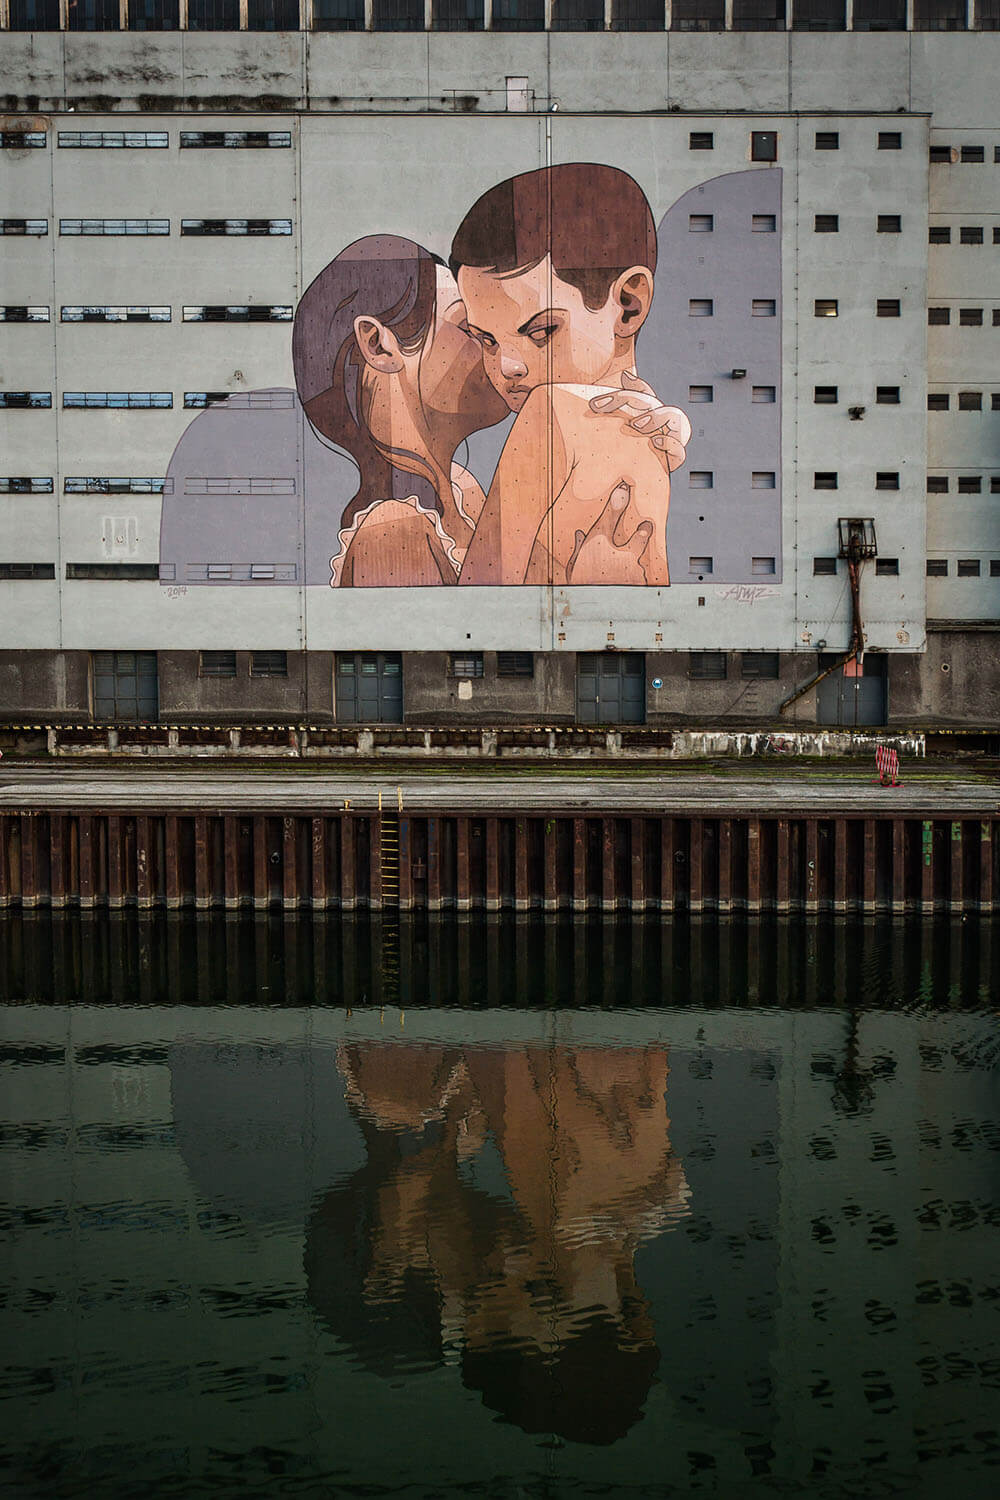 mural harbor graffiti streetart flap photography fotograf philipp greindl photographer linz austria